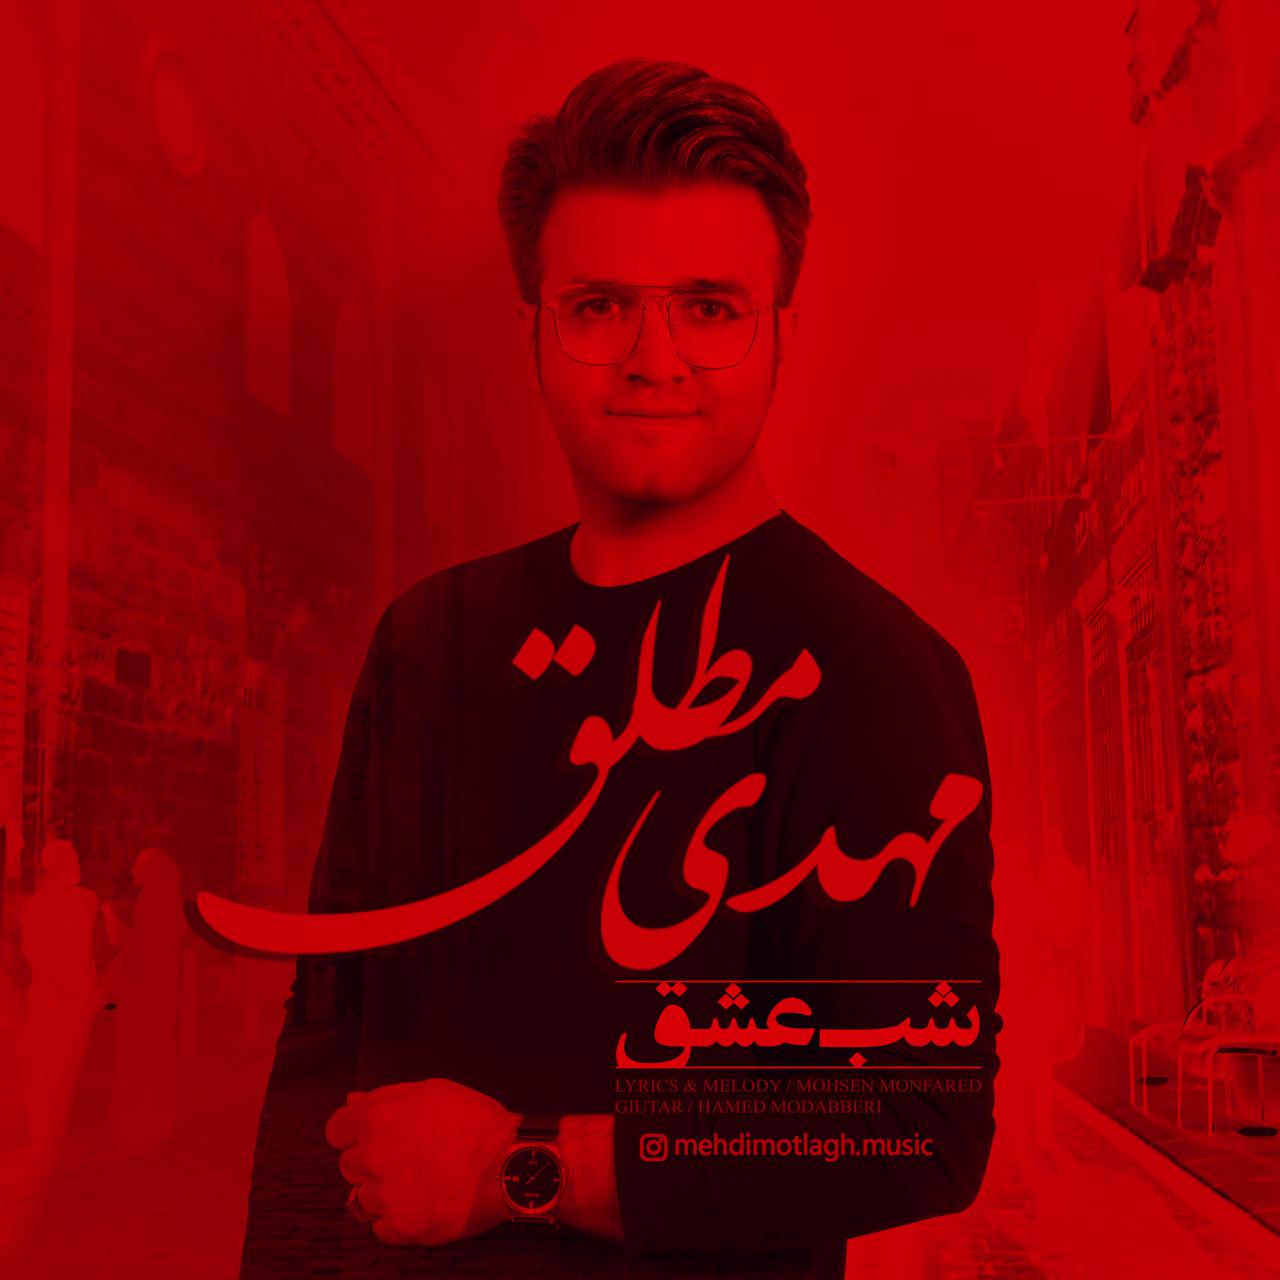  دانلود آهنگ جدید مهدی مطلق - شب عشق | Download New Music By Mehdi Motlagh - Shabe Eshgh